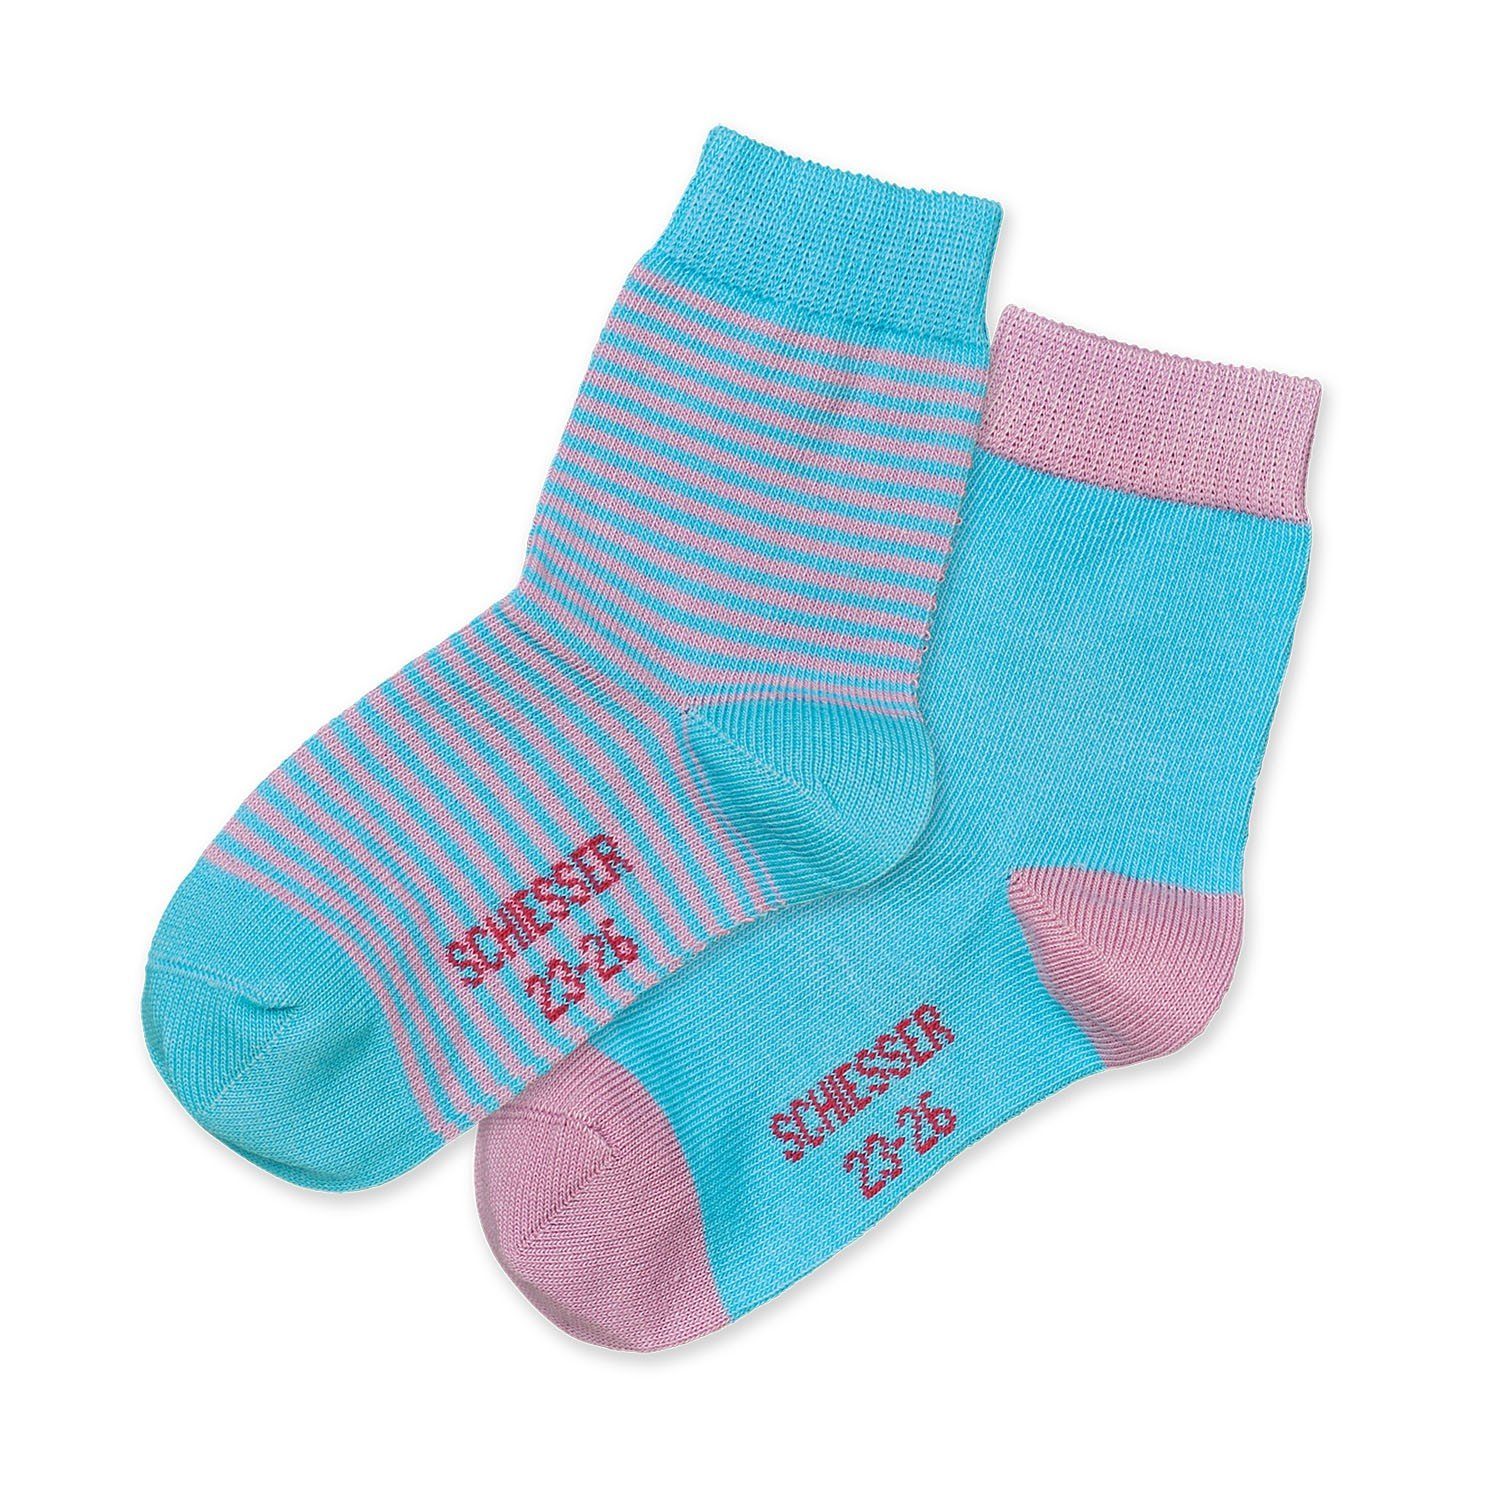 Schiesser Langsocken 144236 (Packung, 2-Paar, 2 Paar) Kinder Socken, Jungen & Mädchen mit Baumwolle, Kindersocken